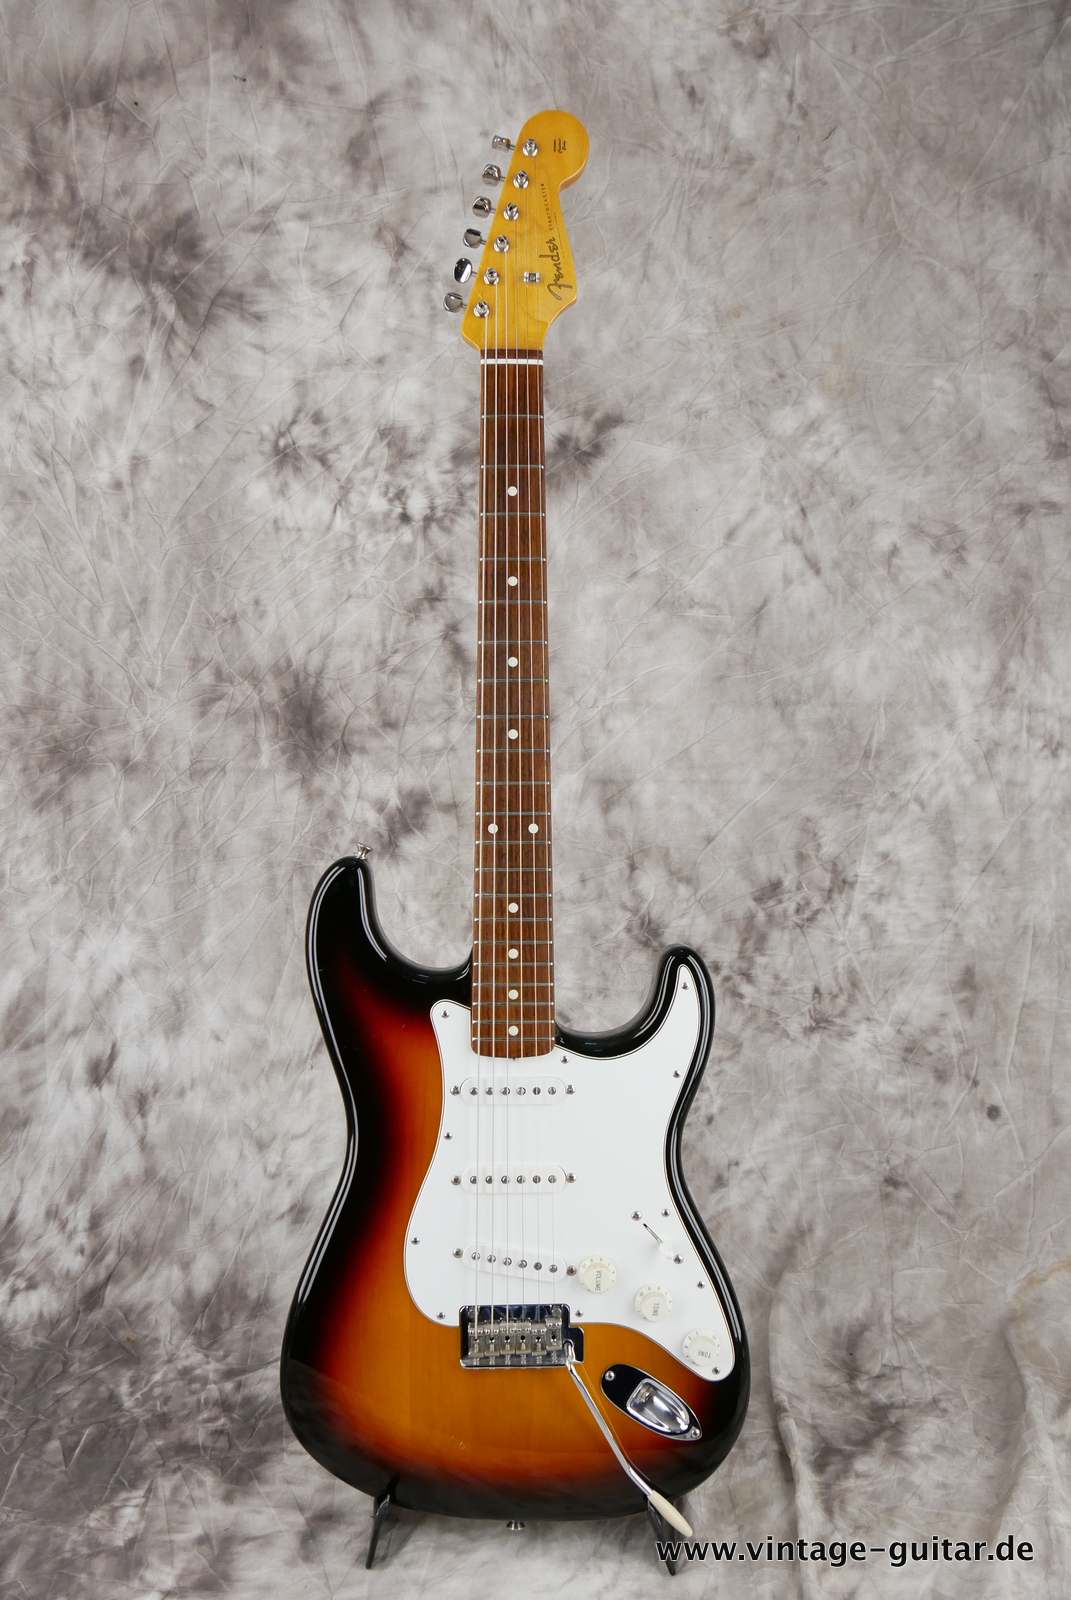 Fender_Stratocaster_crafted_in_Japan_sunburst_two_piont_tromolo_3,76kg-001.JPG